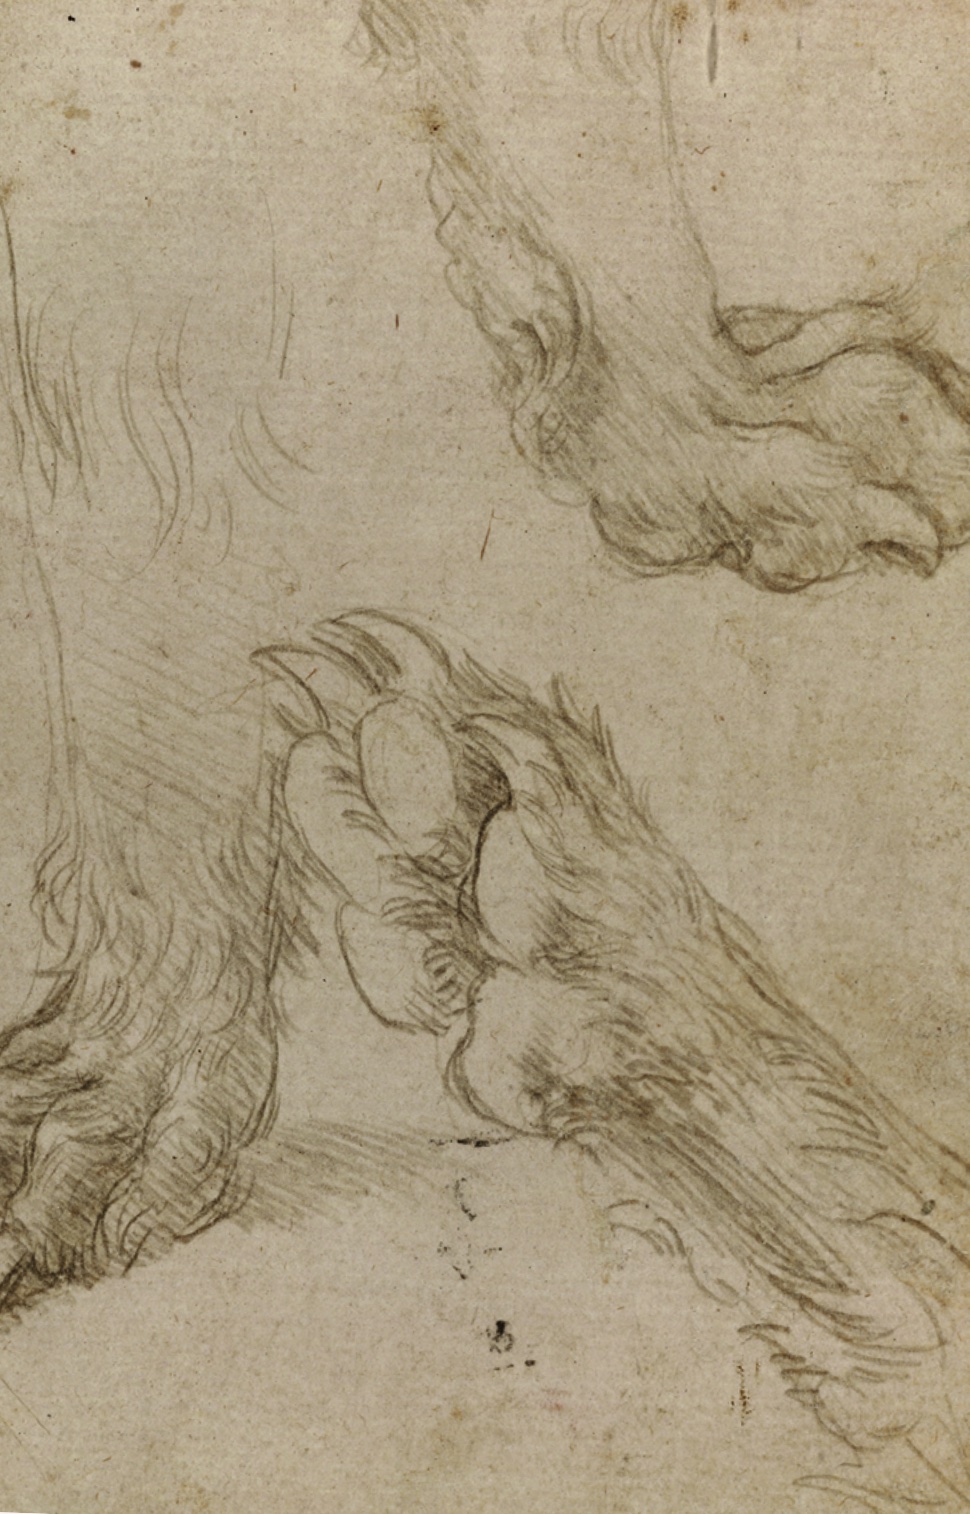 Leonardo da Vinci (1452-1519) Studies of a Dog’s Paw (verso)